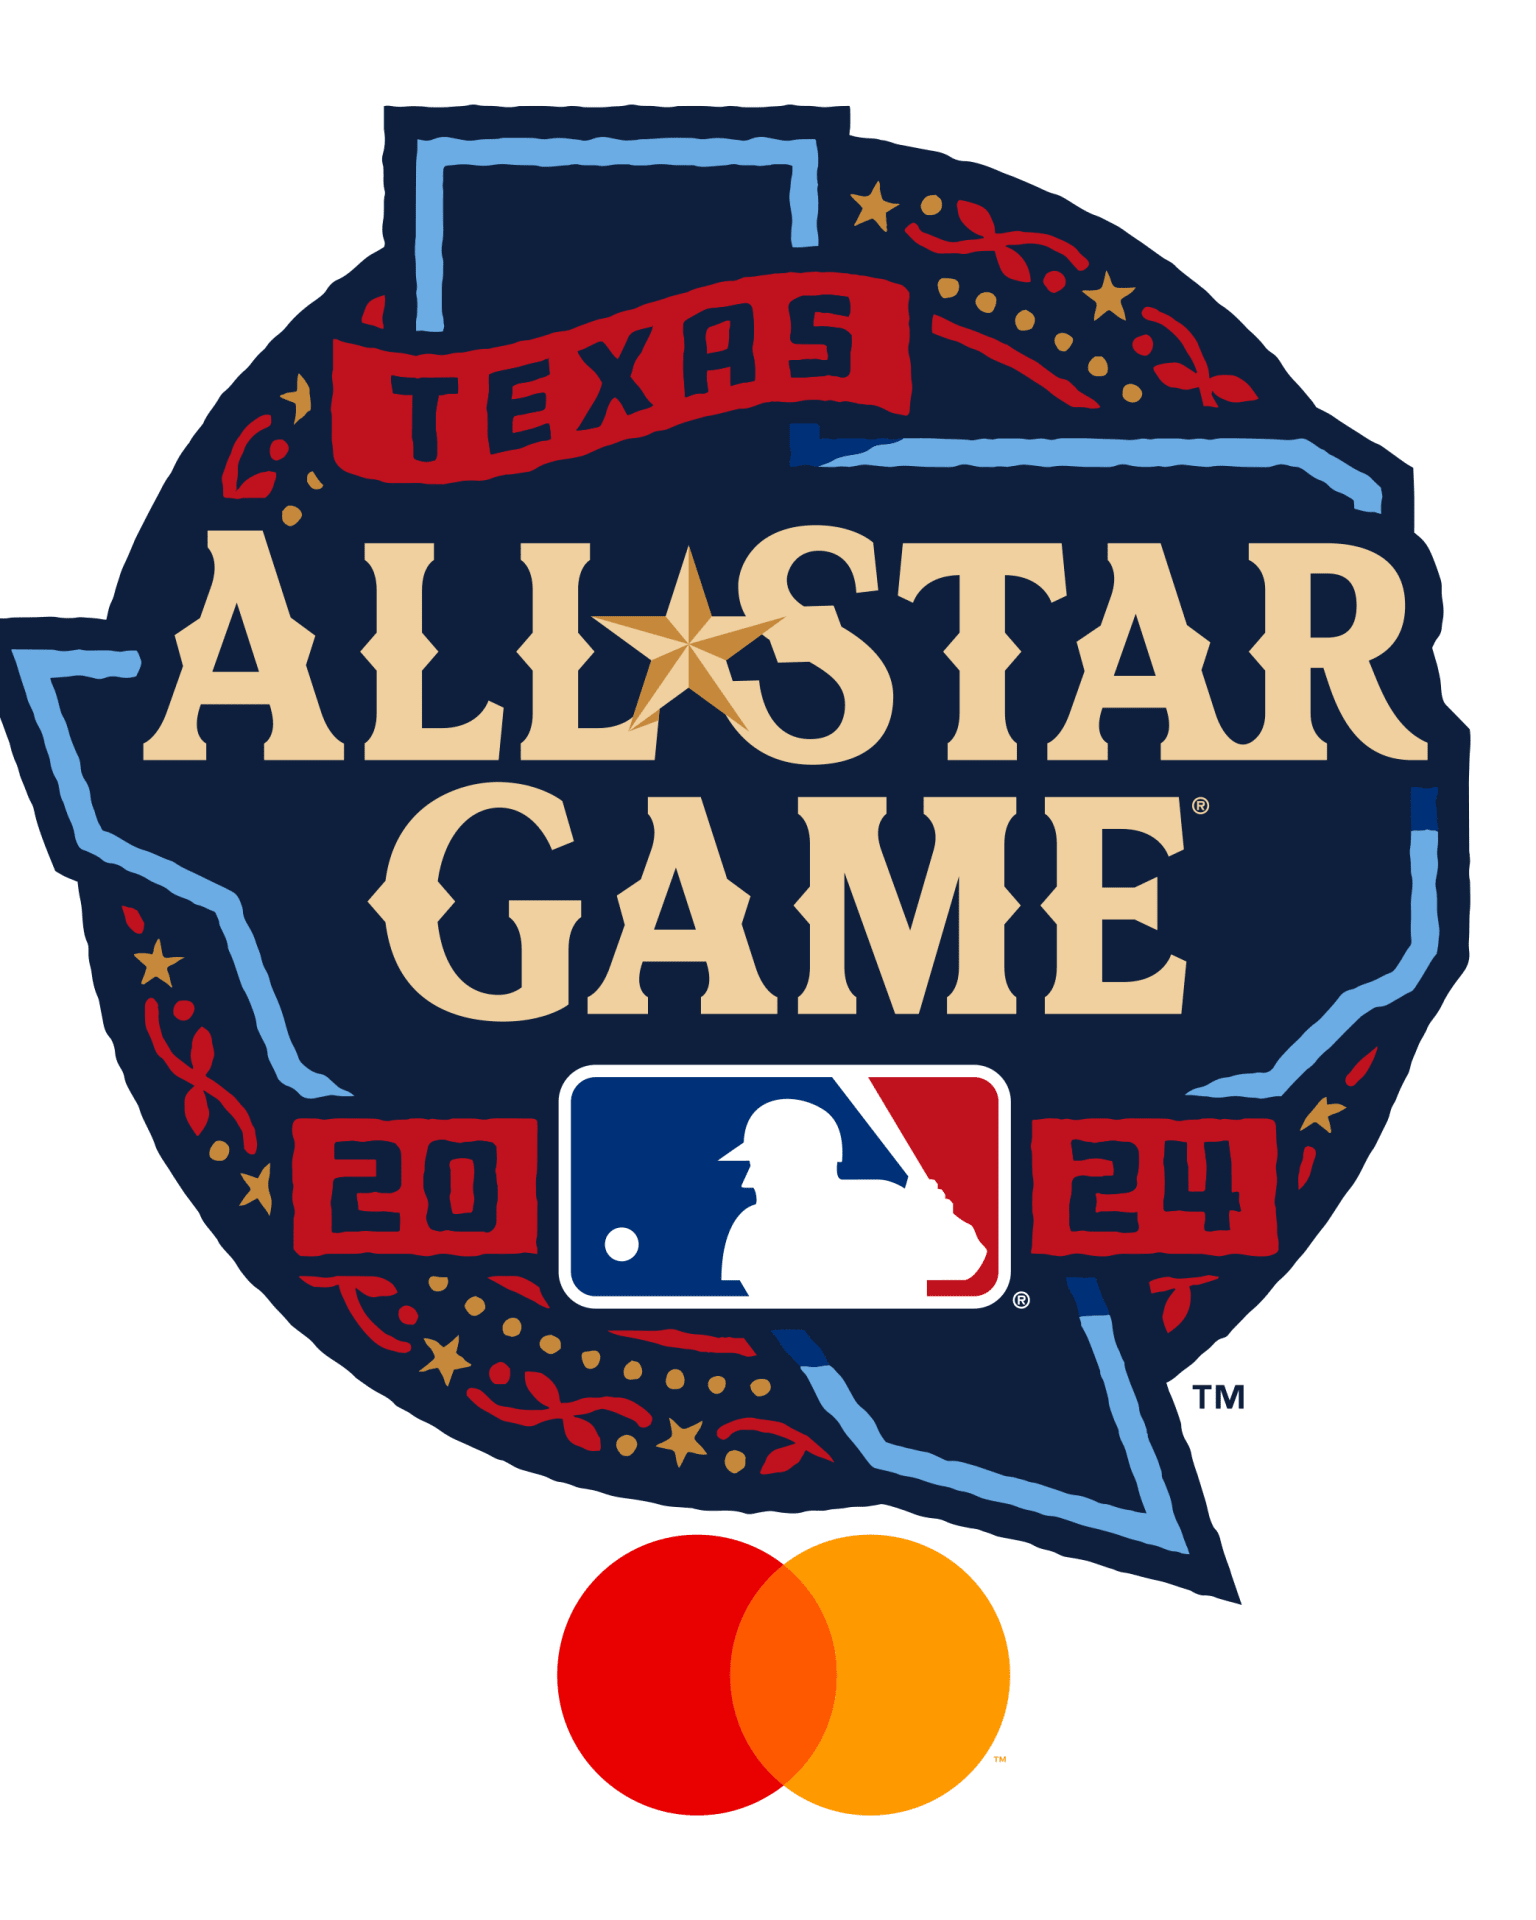 MLB AllStar Game